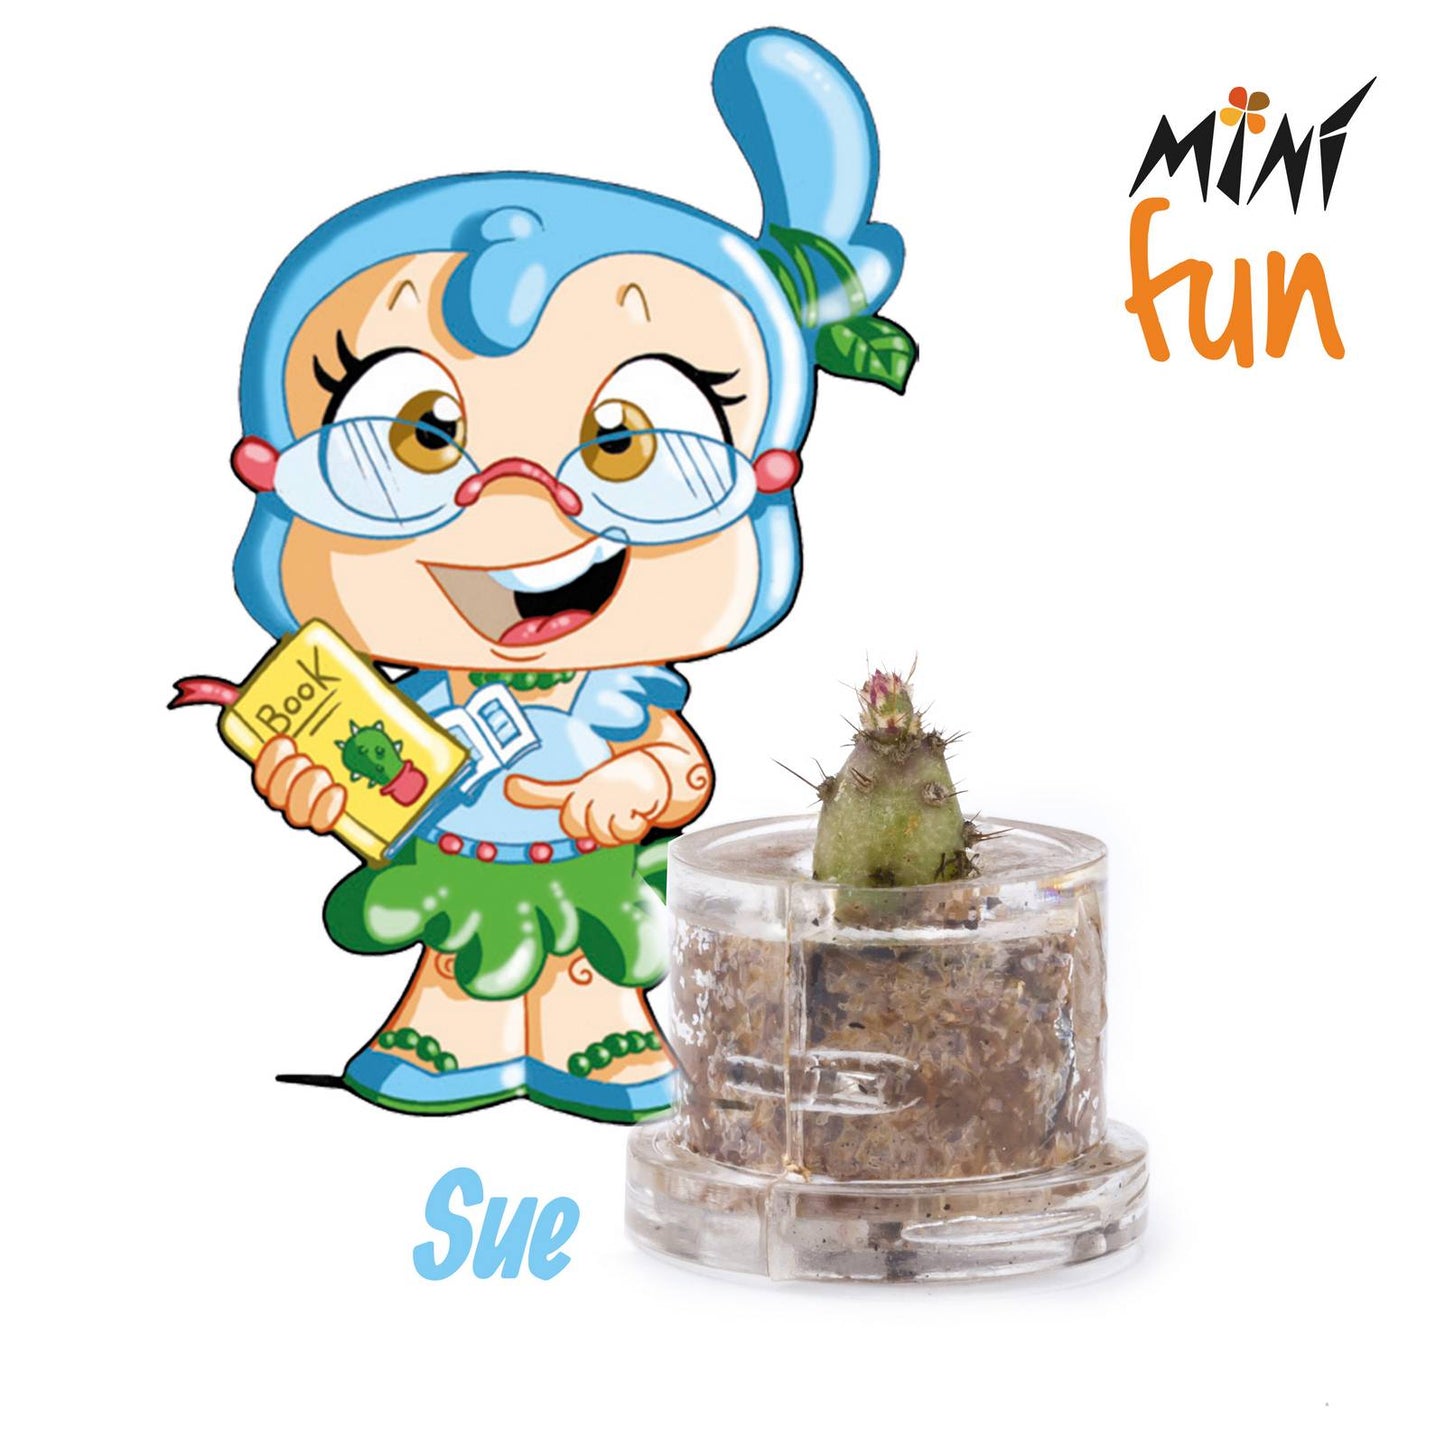 Minì Fun Sue - Mini pianta per i saggi